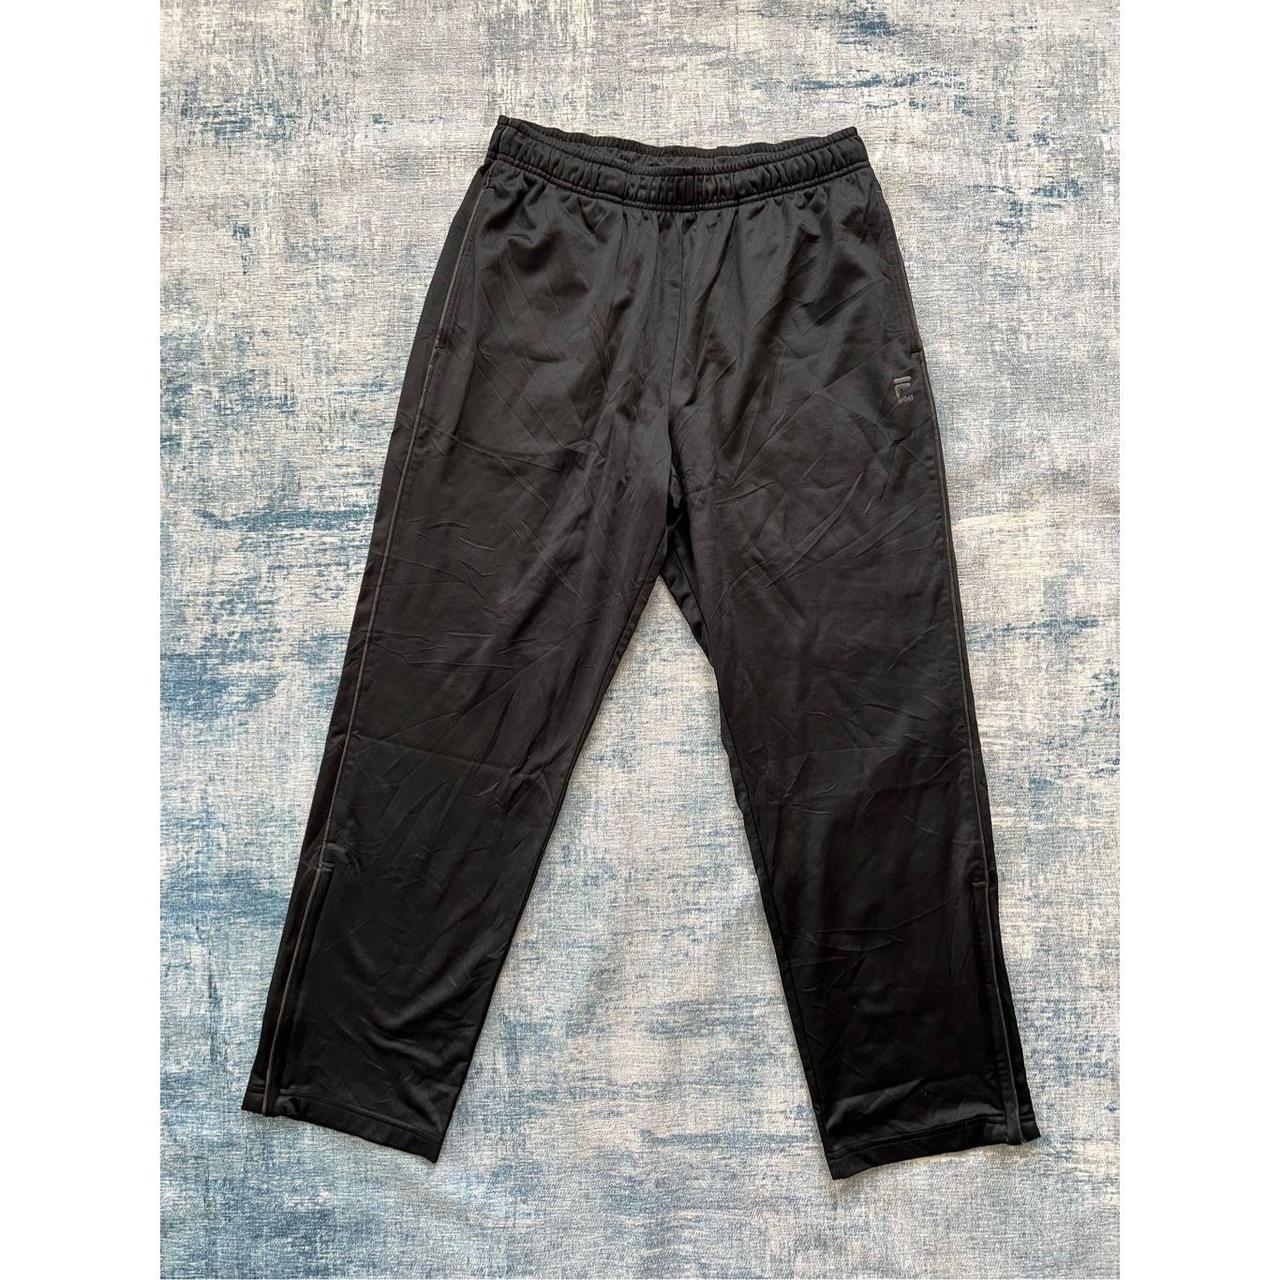 Fila Sport Black Zip Hem Athletic Pants Mens - Depop